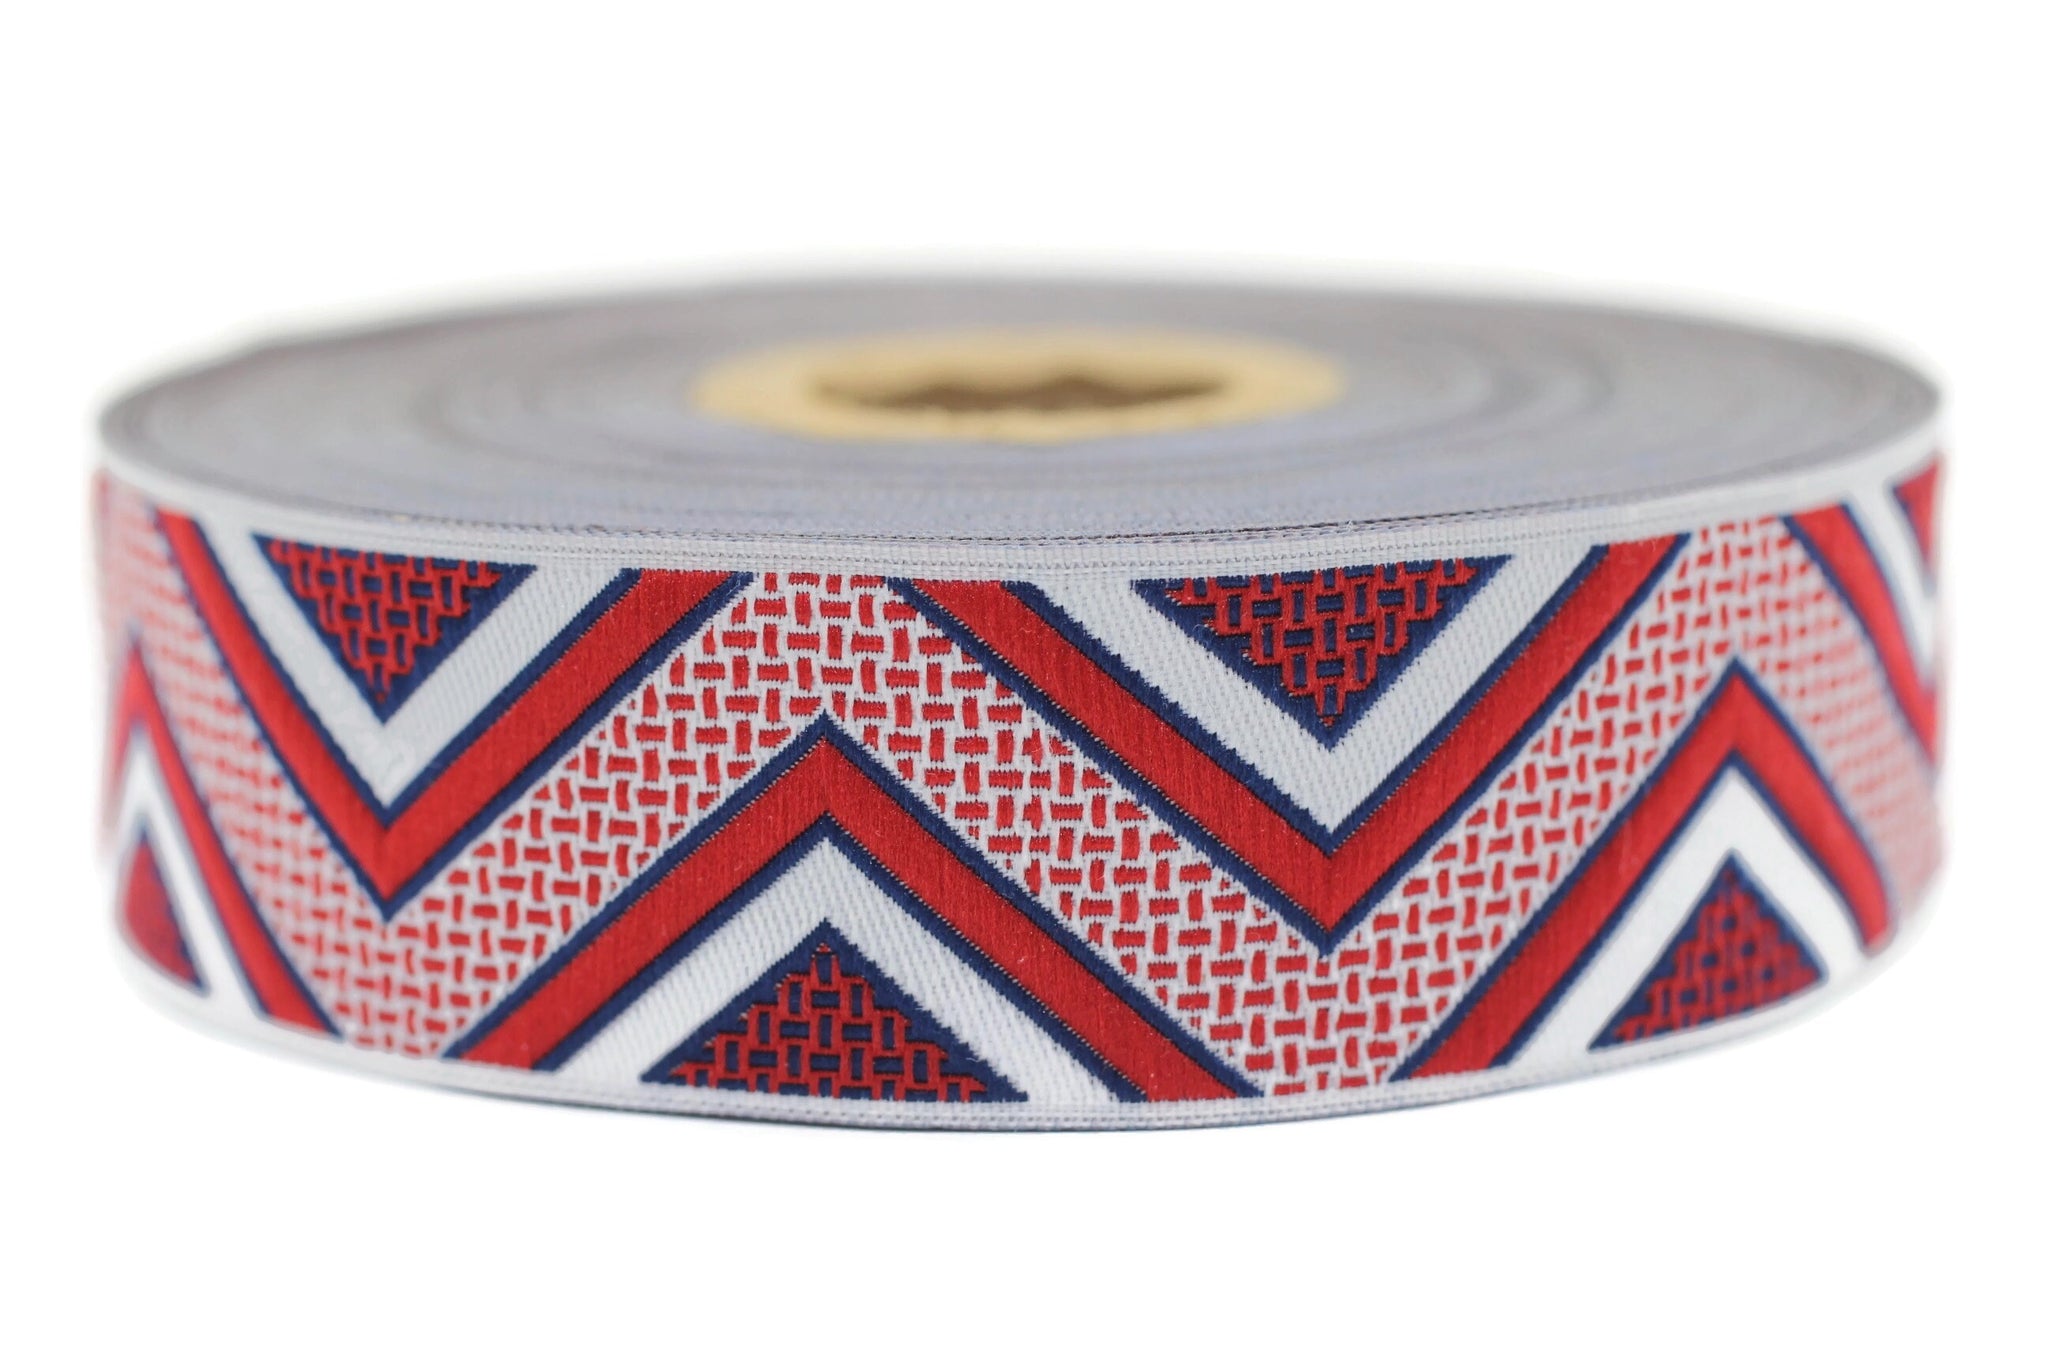 25 mm Red Chevron Jacquard ribbon, 0.98 inch, Decorative ribbon, Craft Ribbon, Jacquard trim, Geometric ribbon, embroidered ribbon, 25706